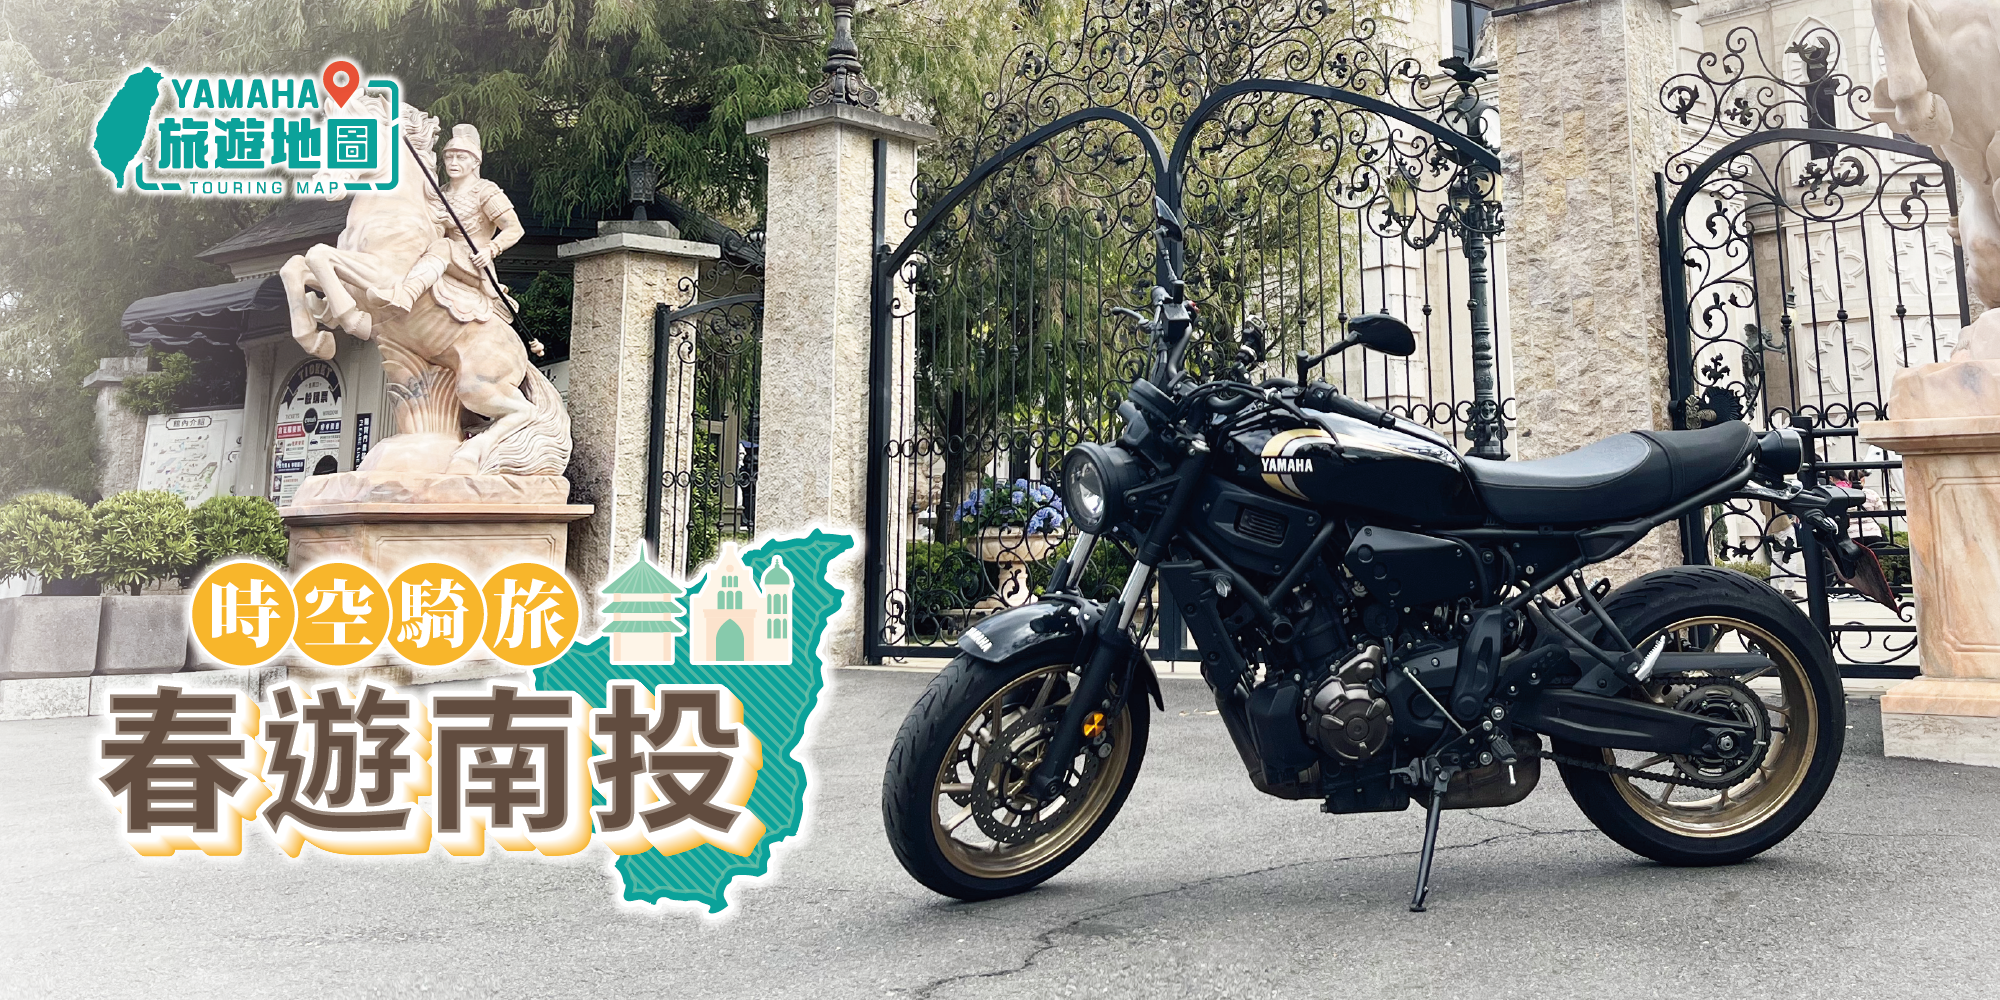 Yamaha 旅遊地圖-時空騎旅 春遊南投